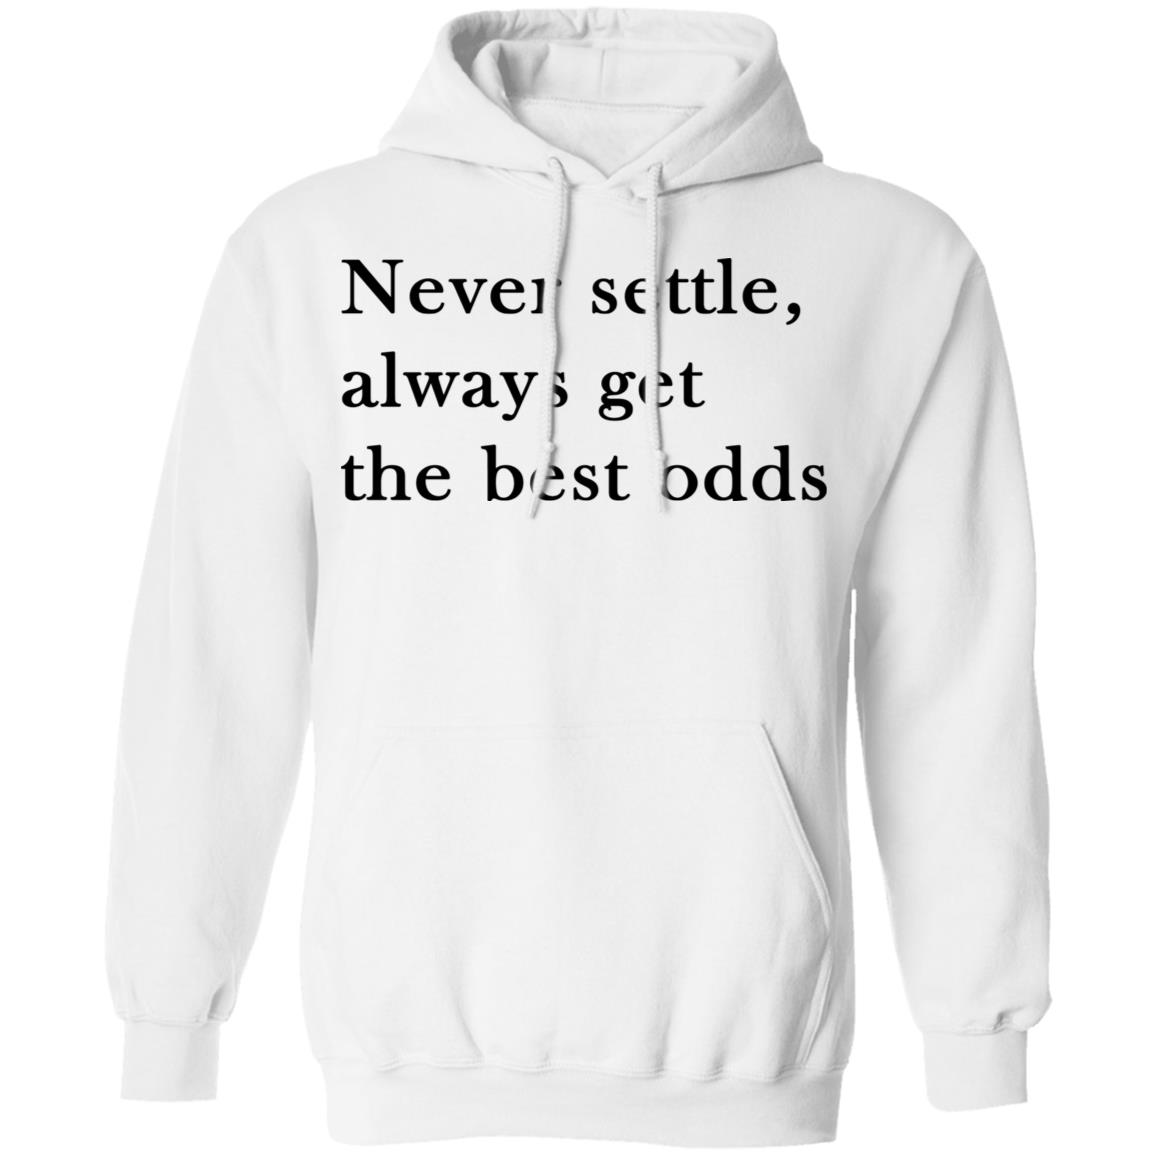 Never settle, always get the best odds shirt